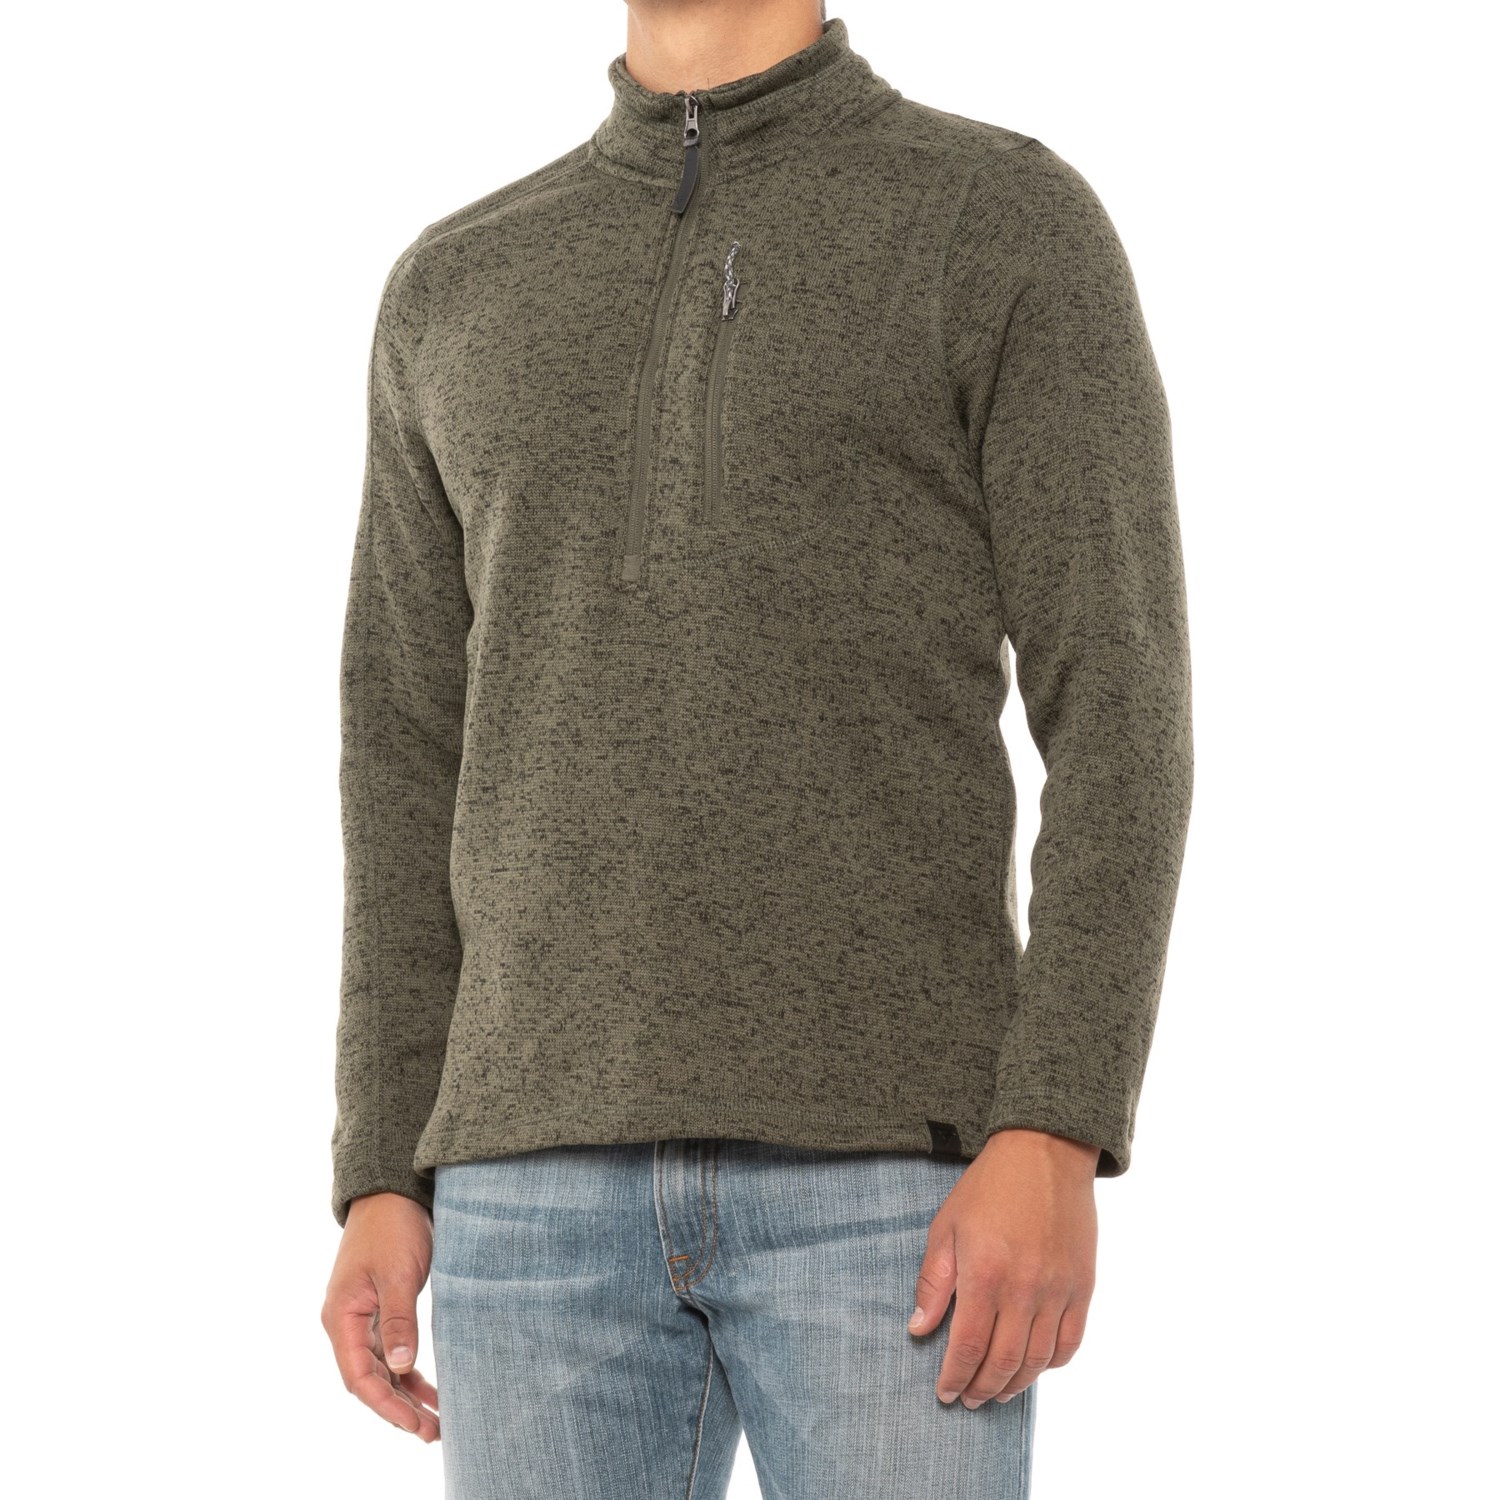 Liv Outdoors Fleece Sweater (For Men) - Save 50%